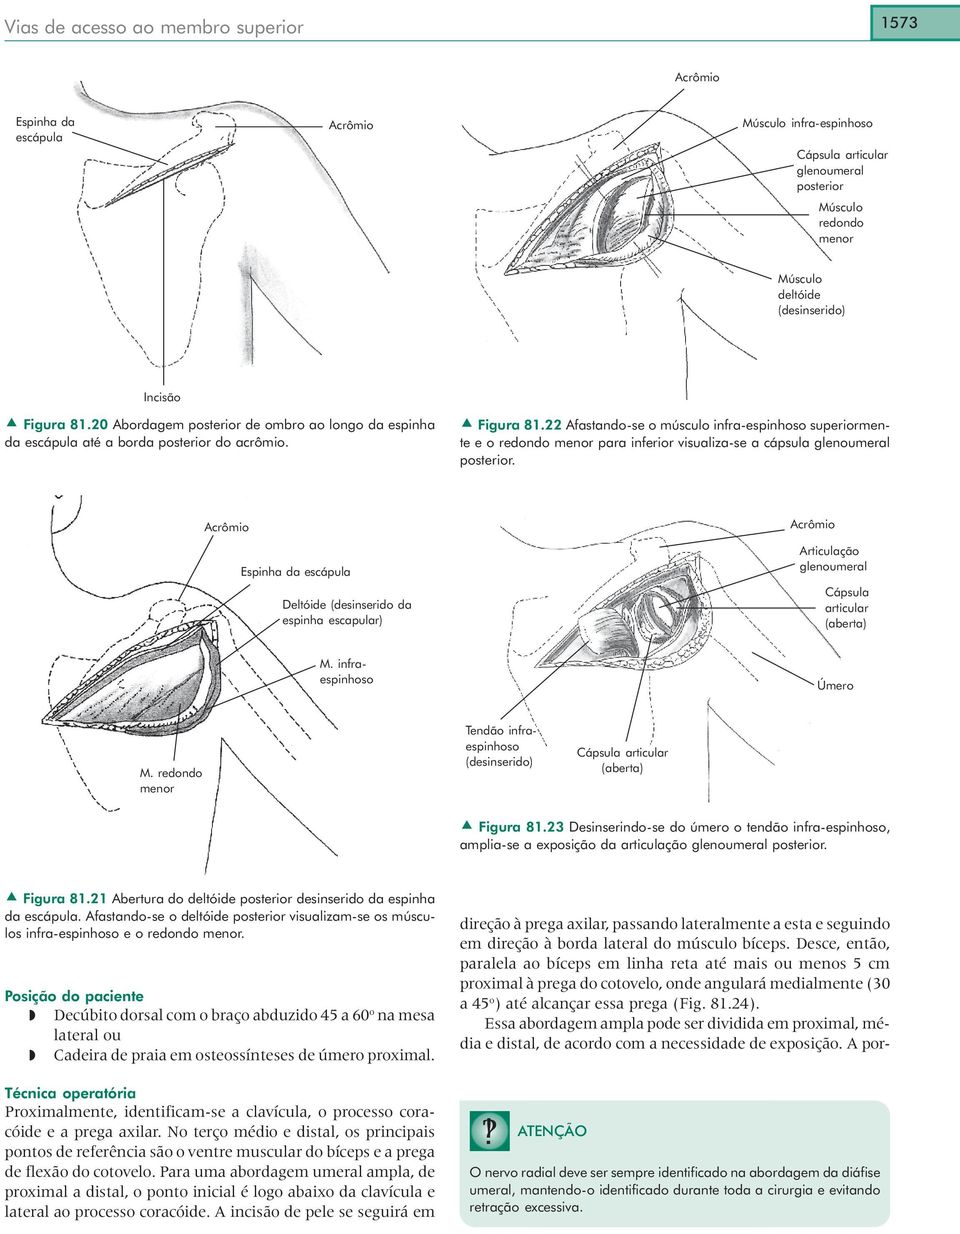 22 Afastando-se o músculo infra-espinhoso superiormente e o redondo menor para inferior visualiza-se a cápsula glenoumeral posterior.